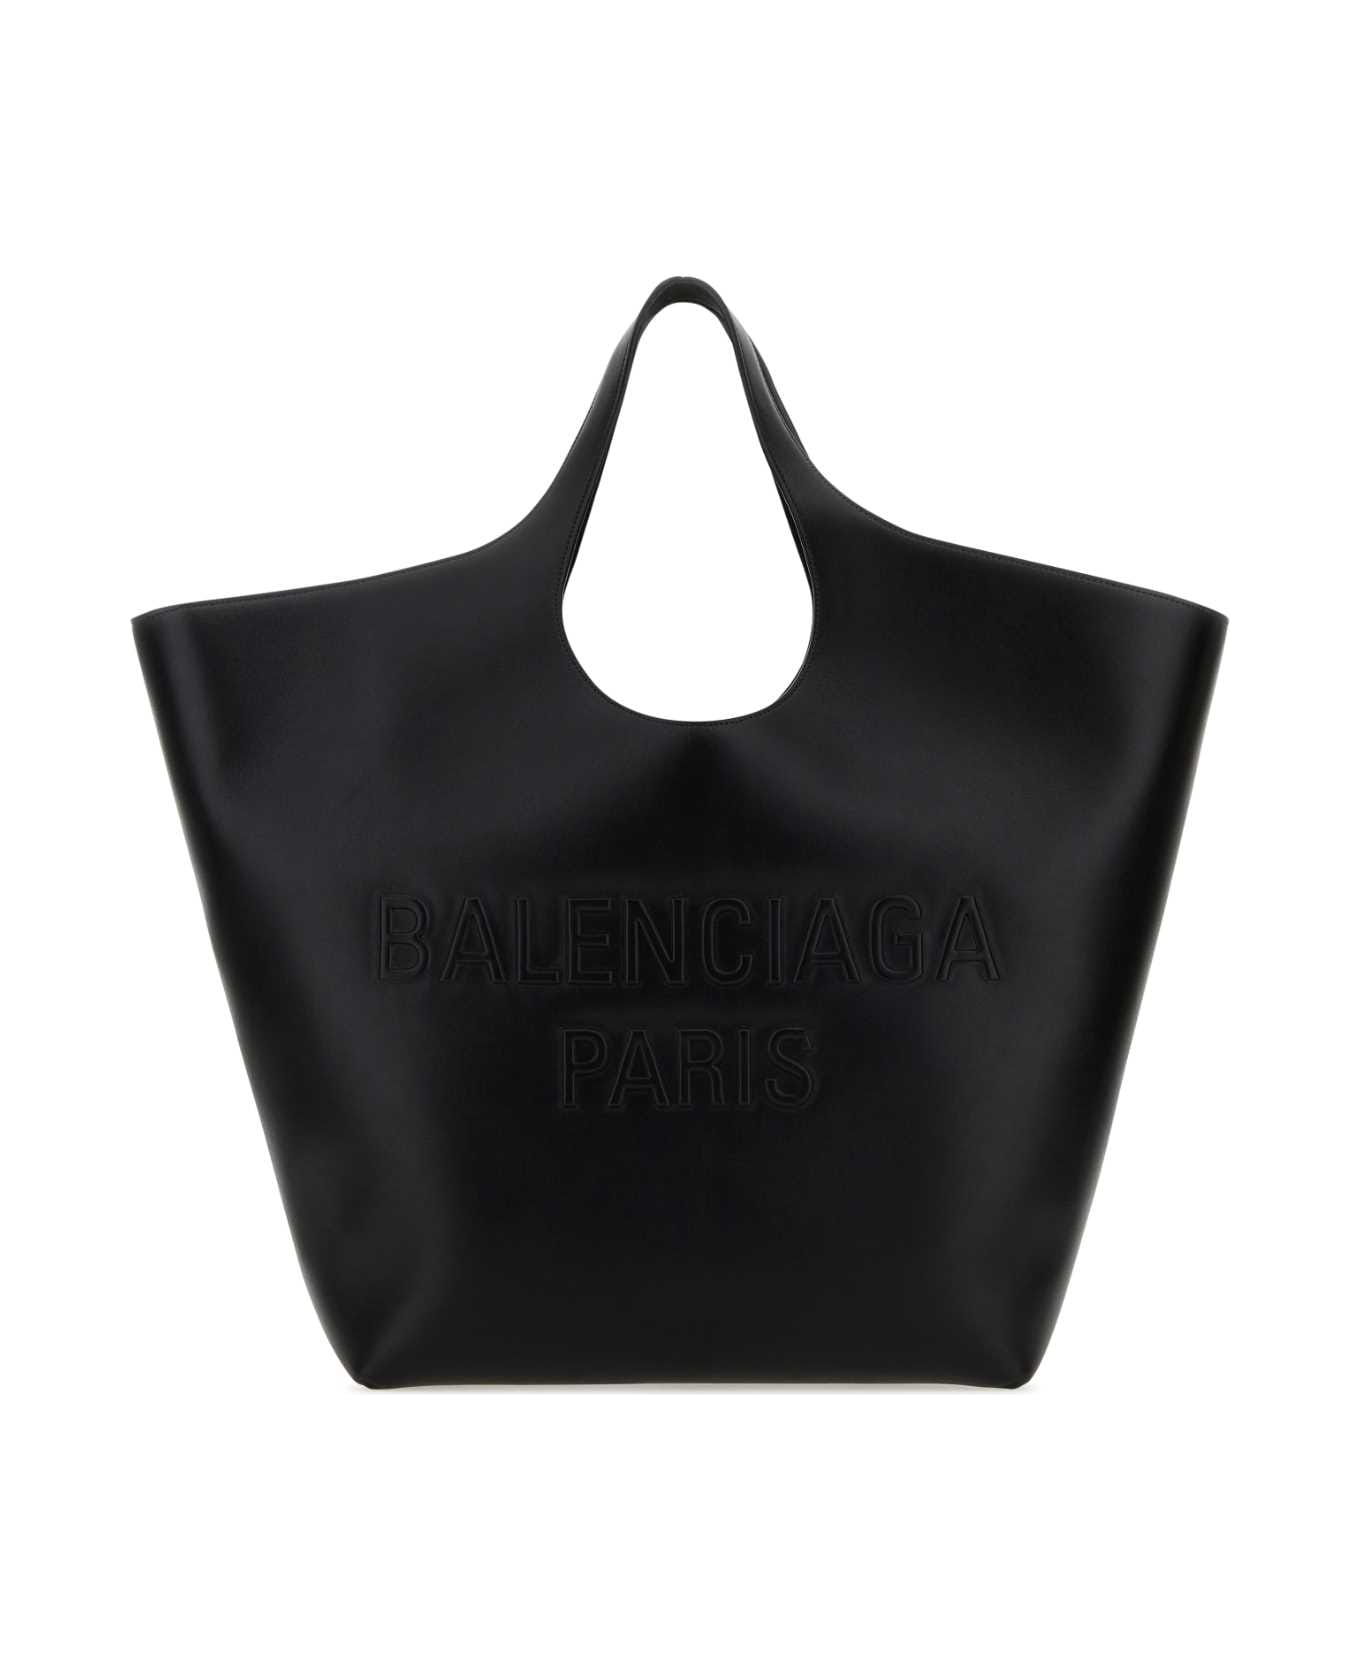 Balenciaga Black Leather Large Mary-kate Shopping Bag - 1000